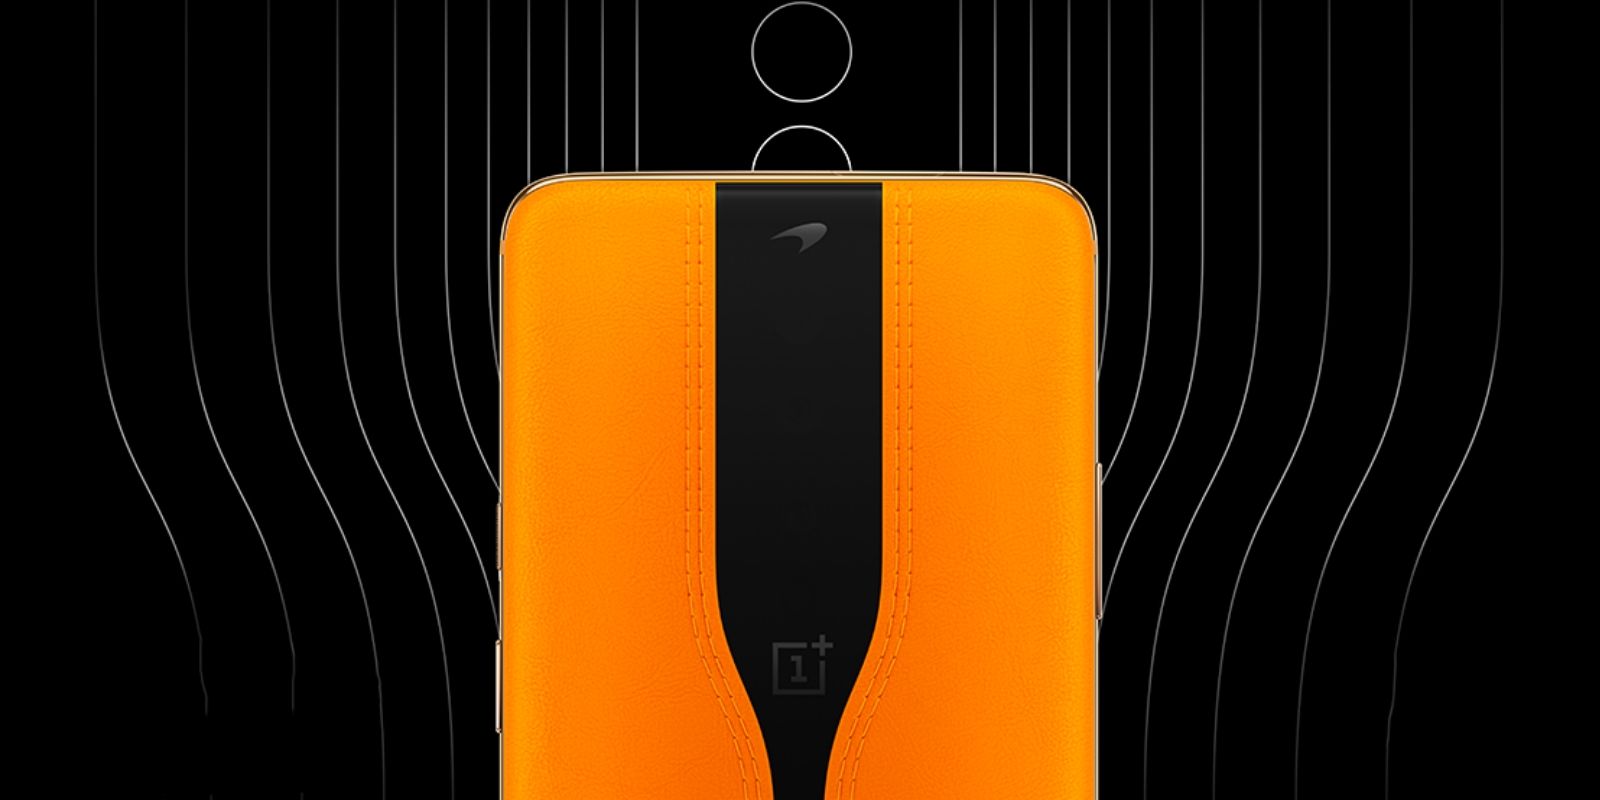 OnePlus Concept One smartphone